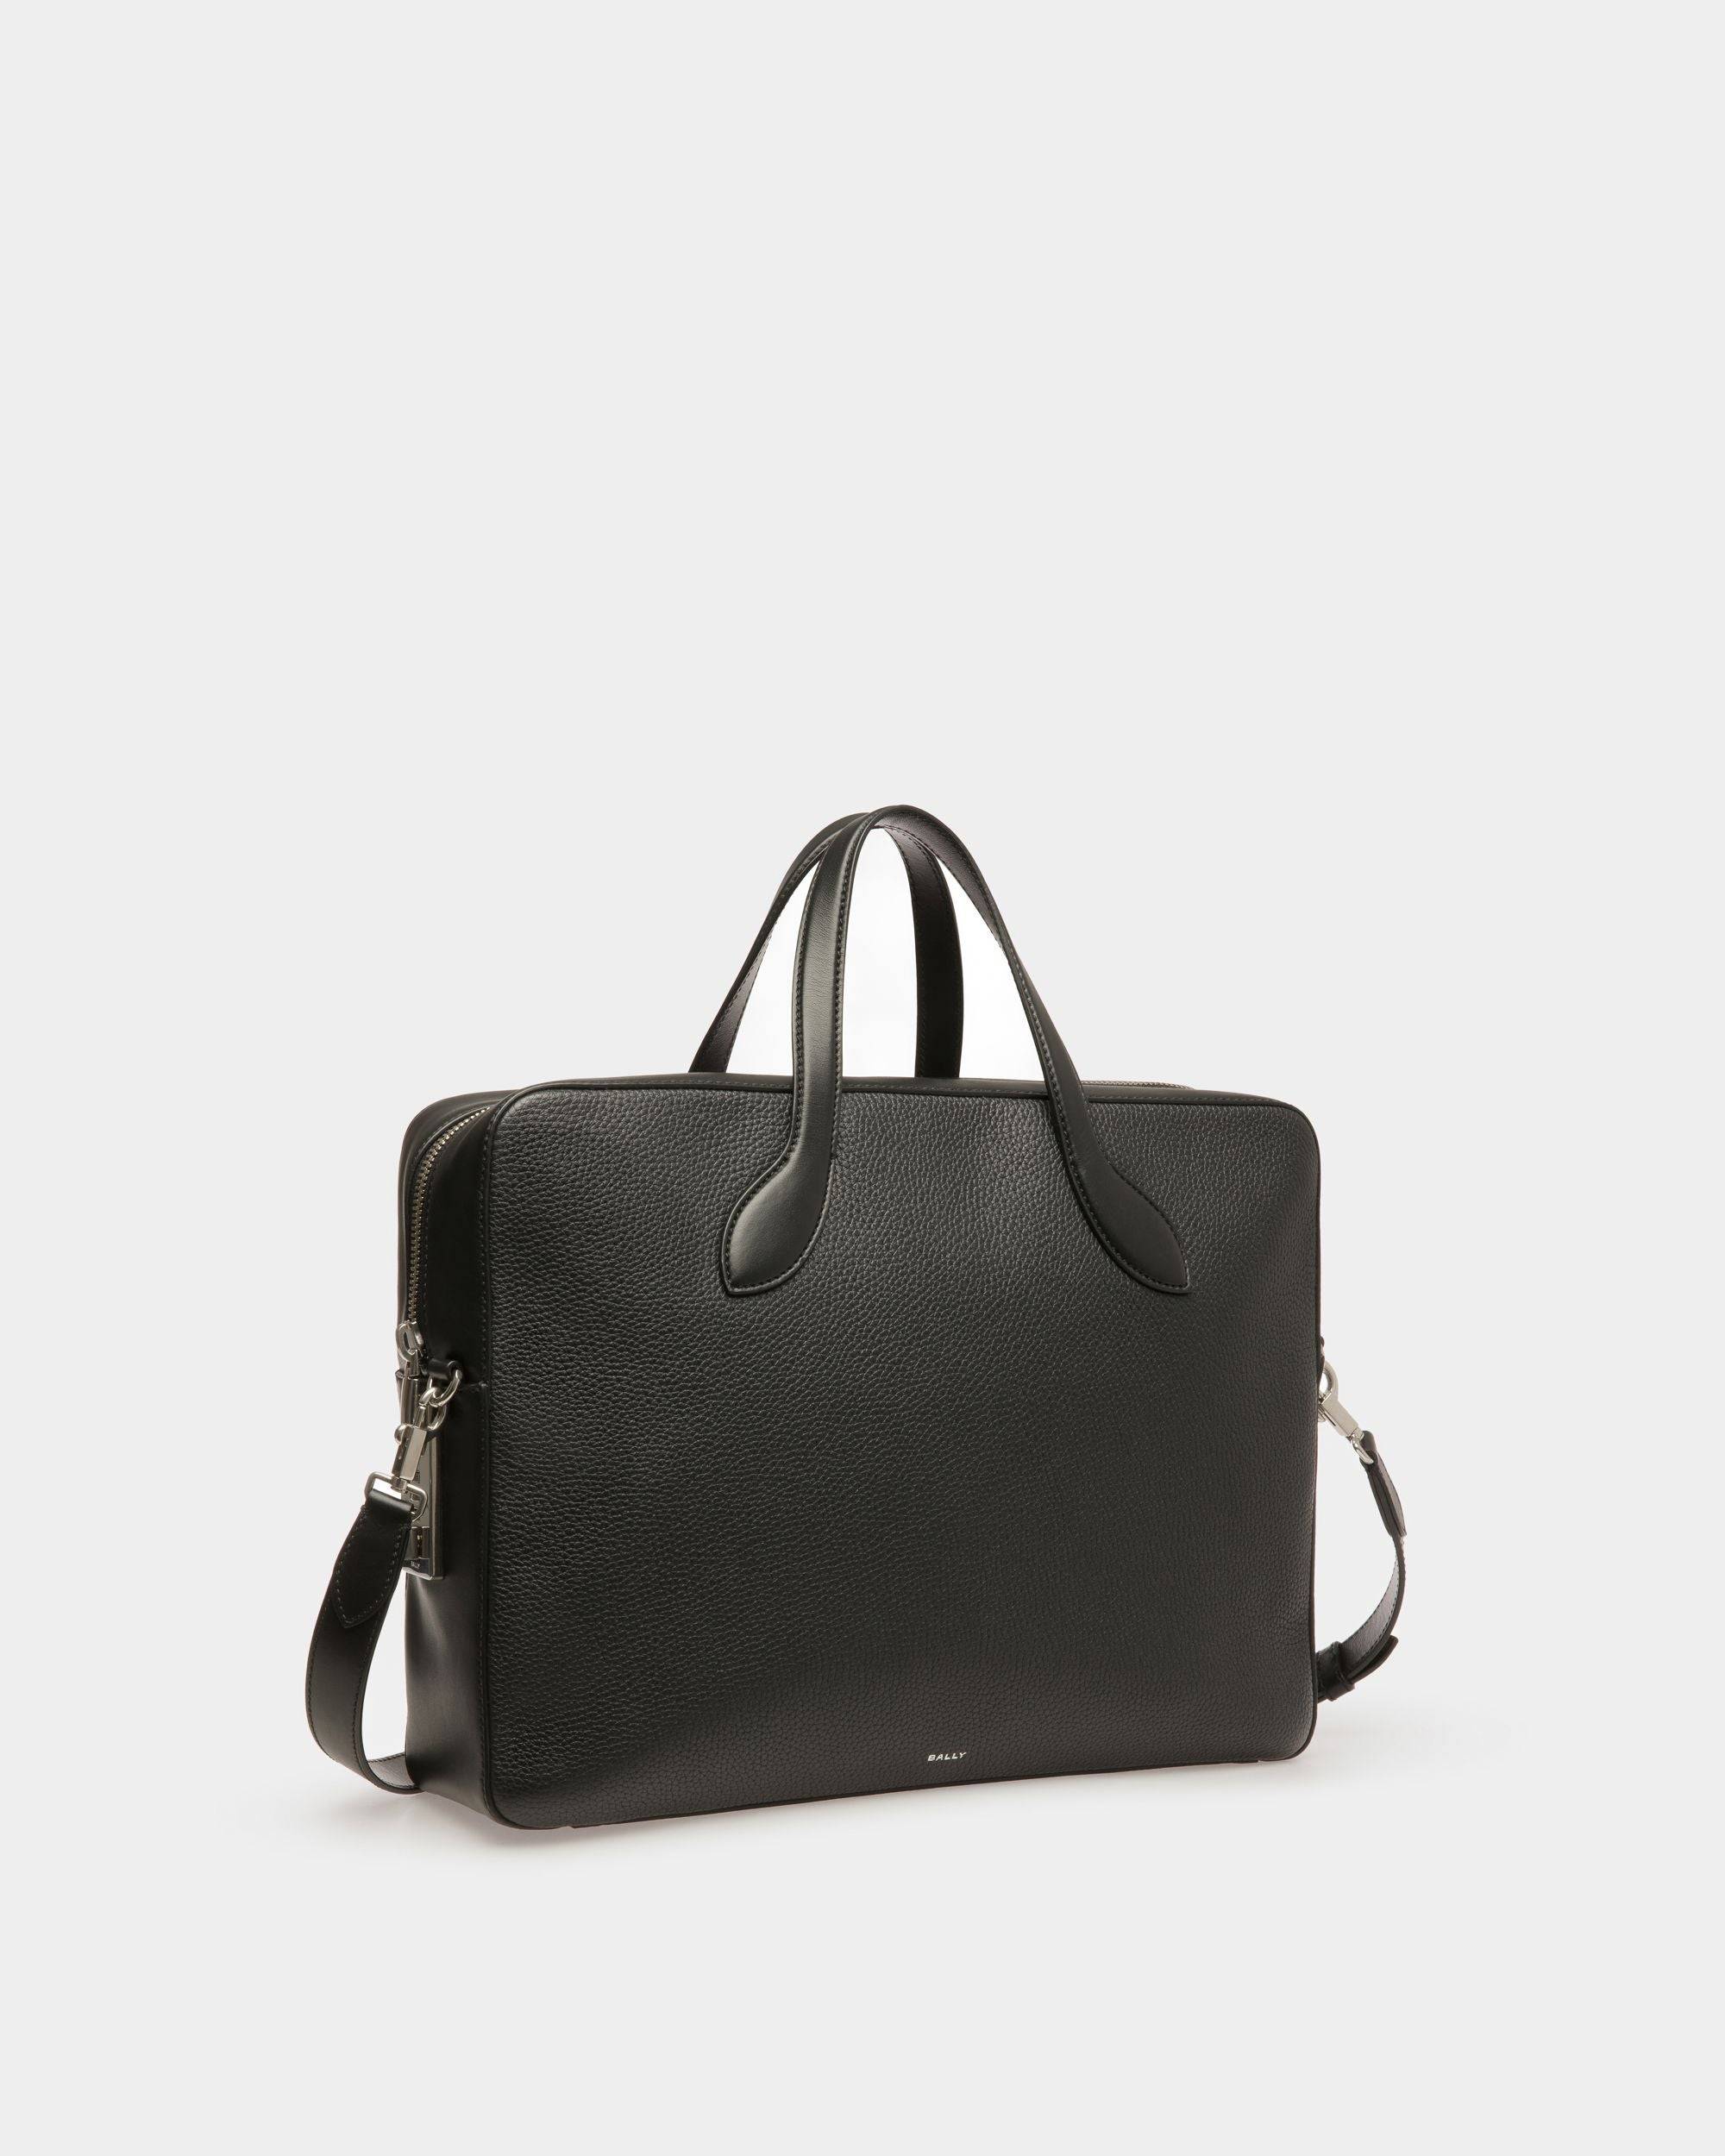 Gentleman | Men's Business Bag | Black Leather | Bally | Still Life 3/4 Front